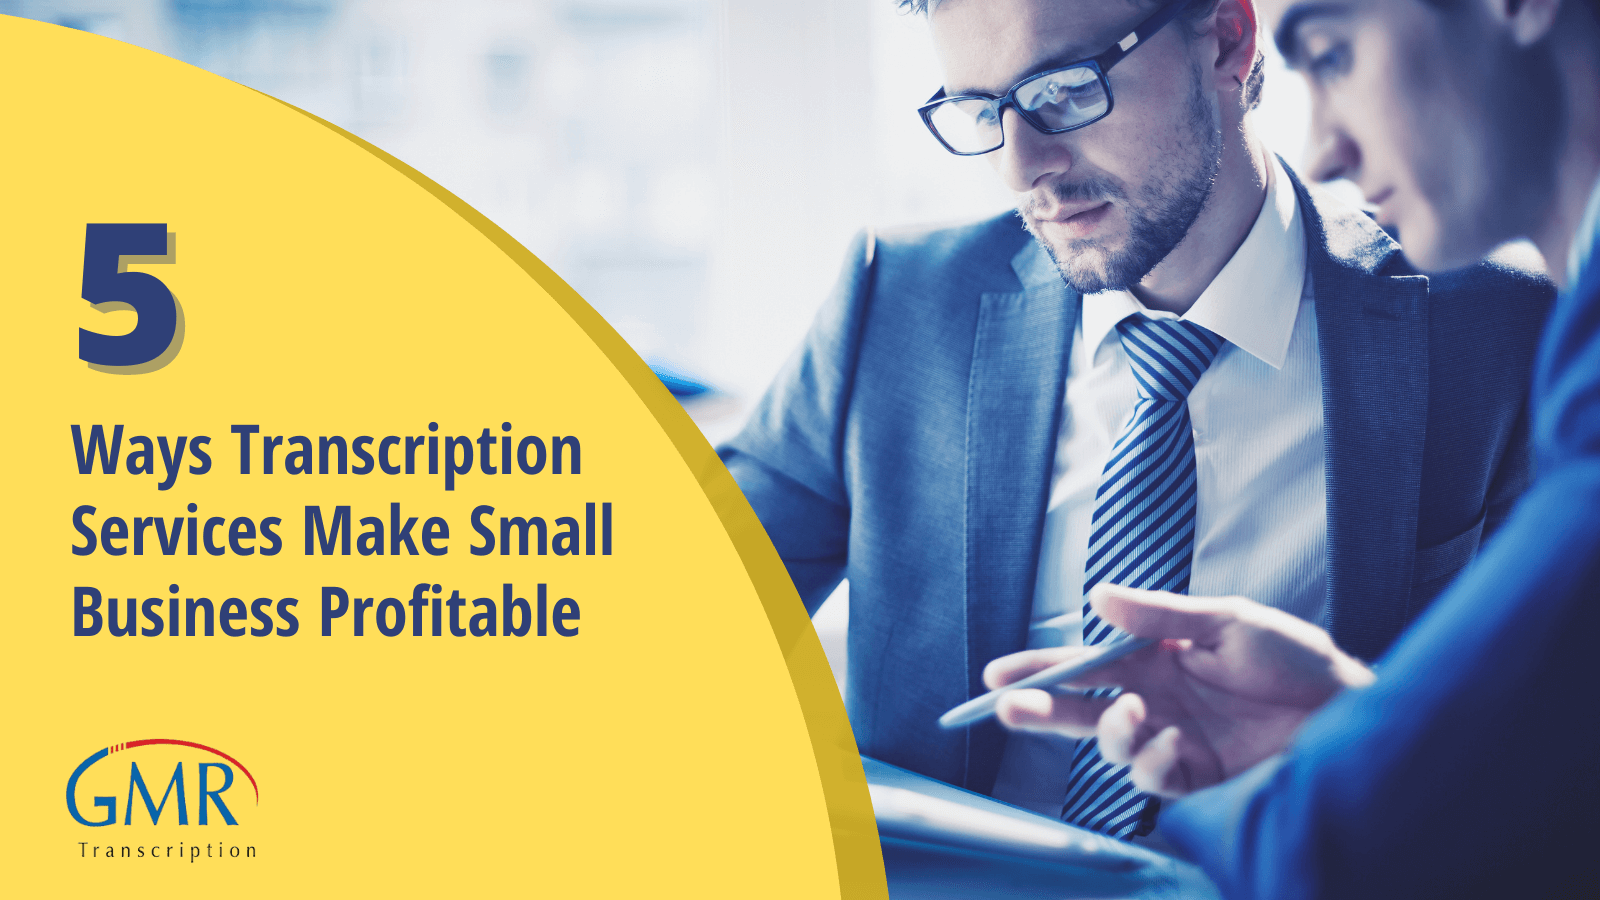 5 Ways Transcription Services Make Small Business Profitable